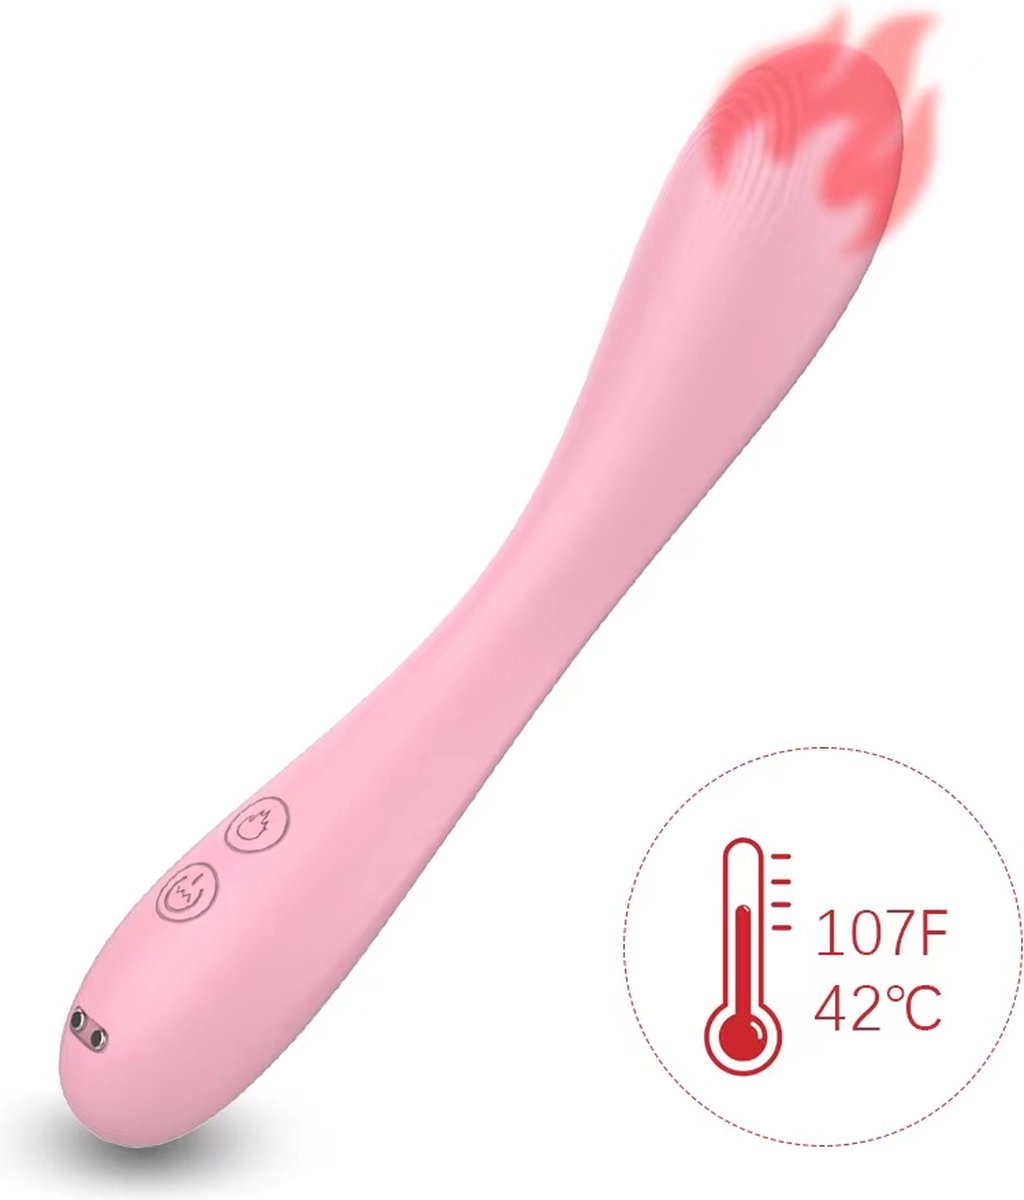 BLUSSERS Clitoris Wand Vibrator + G Spot Vibrator voor Vrouwen - Roze